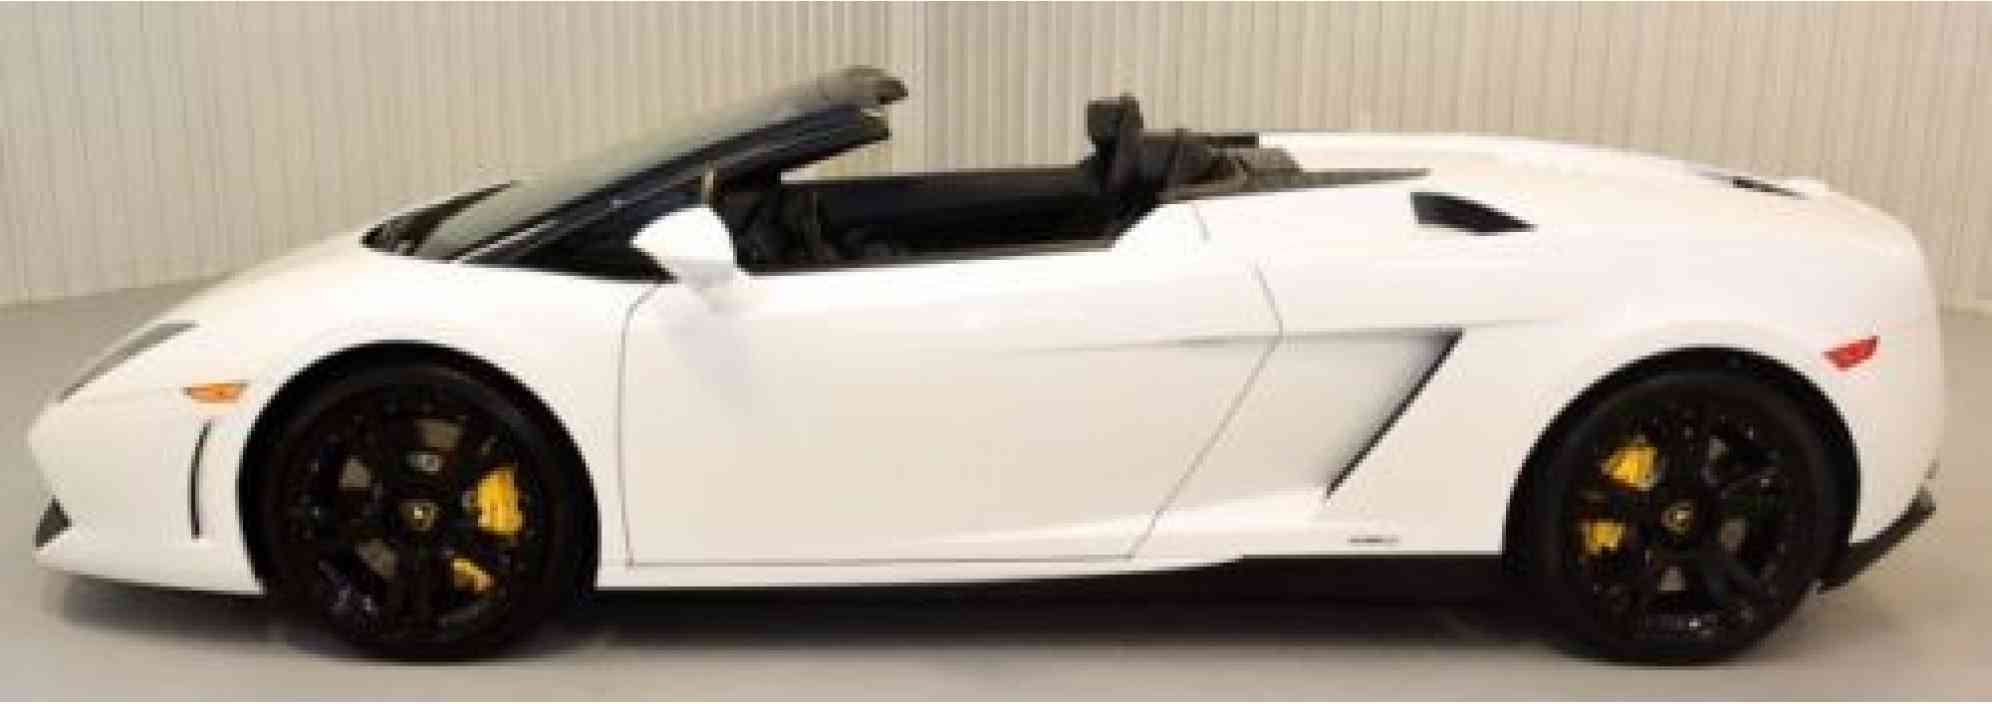 Lamborghini Gallardo 2dr Lp550-2 (2013)